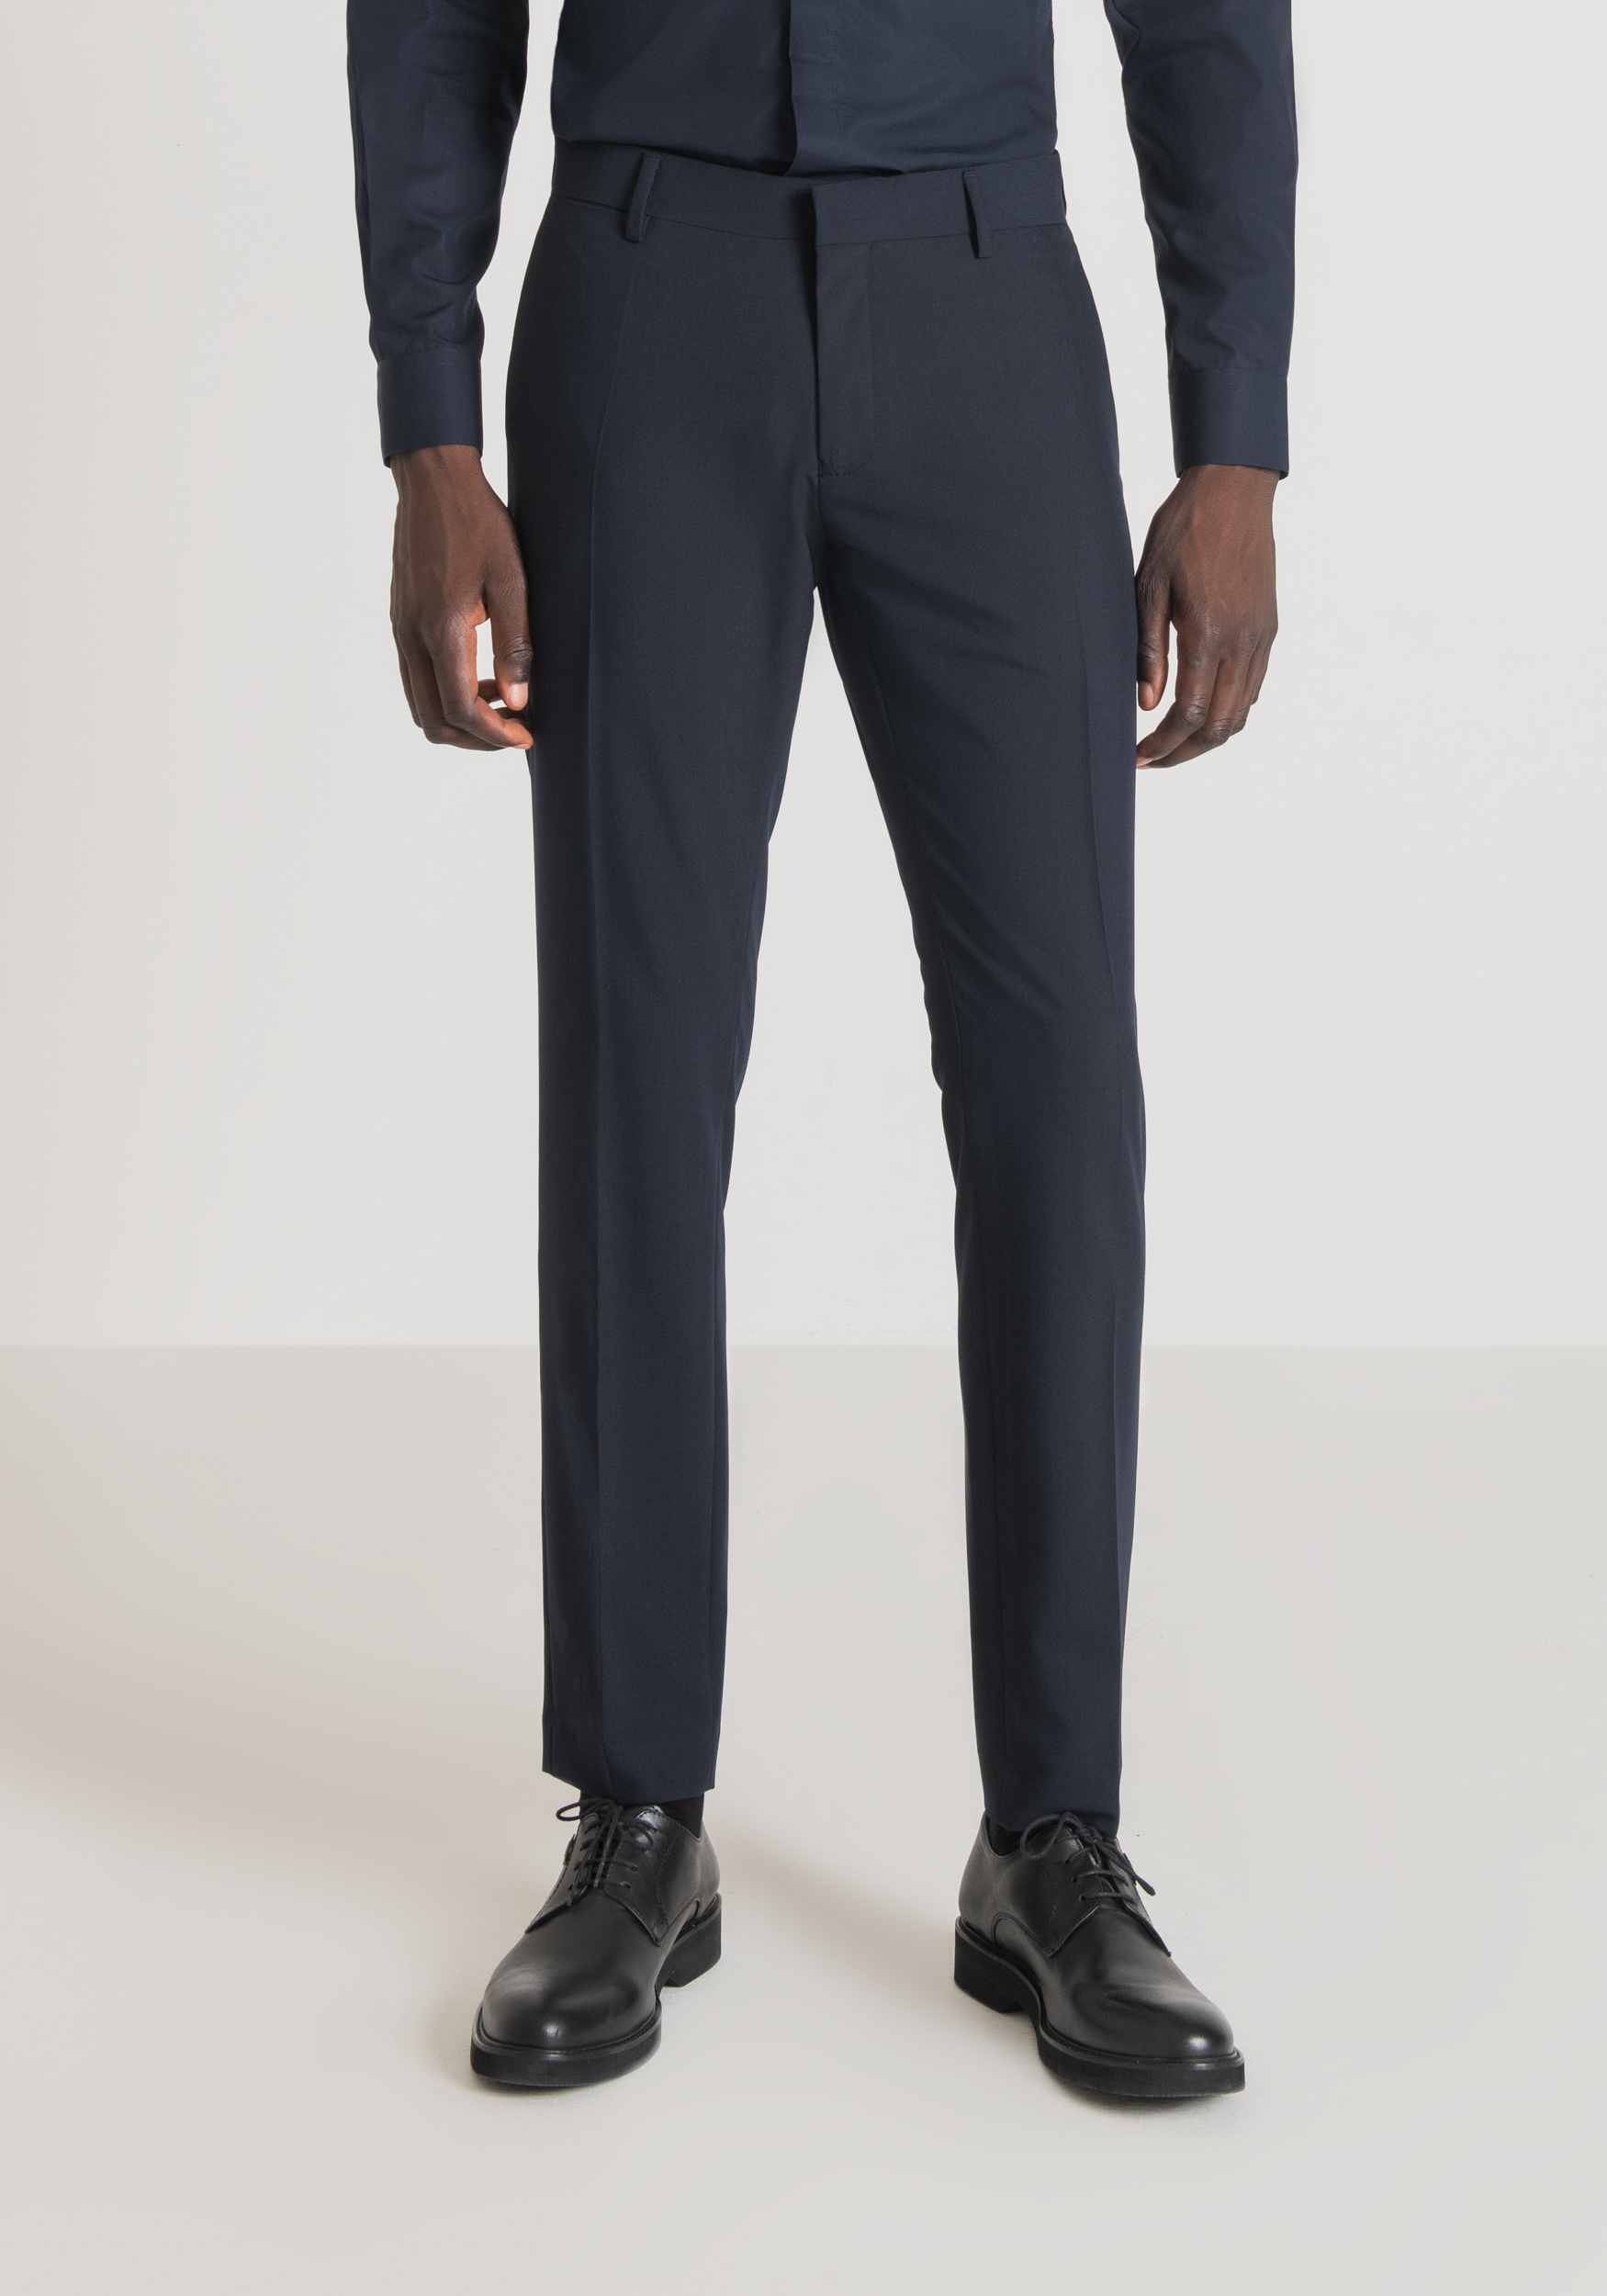 Antony Morato Pantalon Slim Fit Bonnie En Viscose Melangee Elastique Encre Bleu | Homme Pantalons